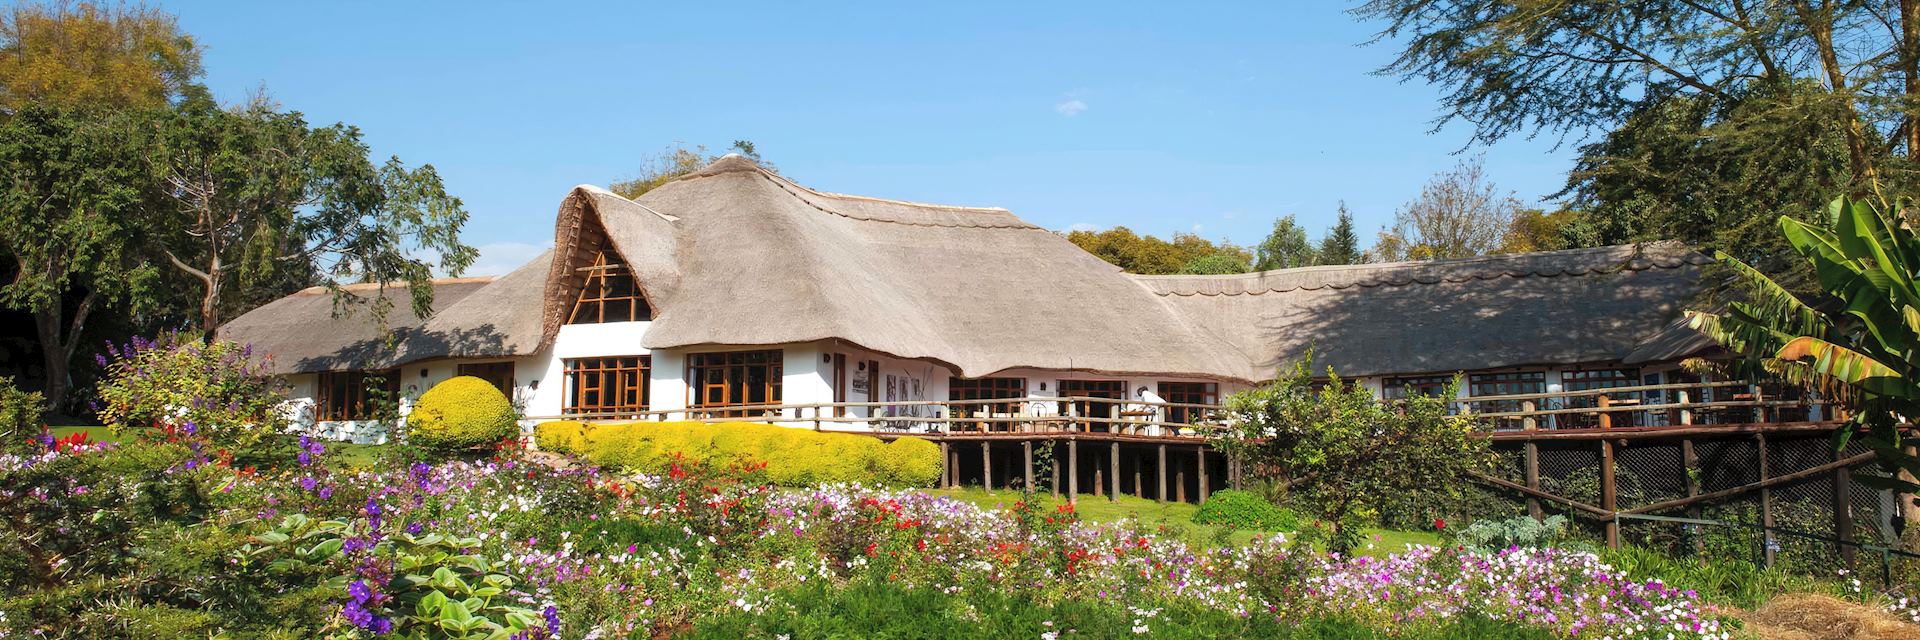 Ngorongoro Farmhouse, Karatu